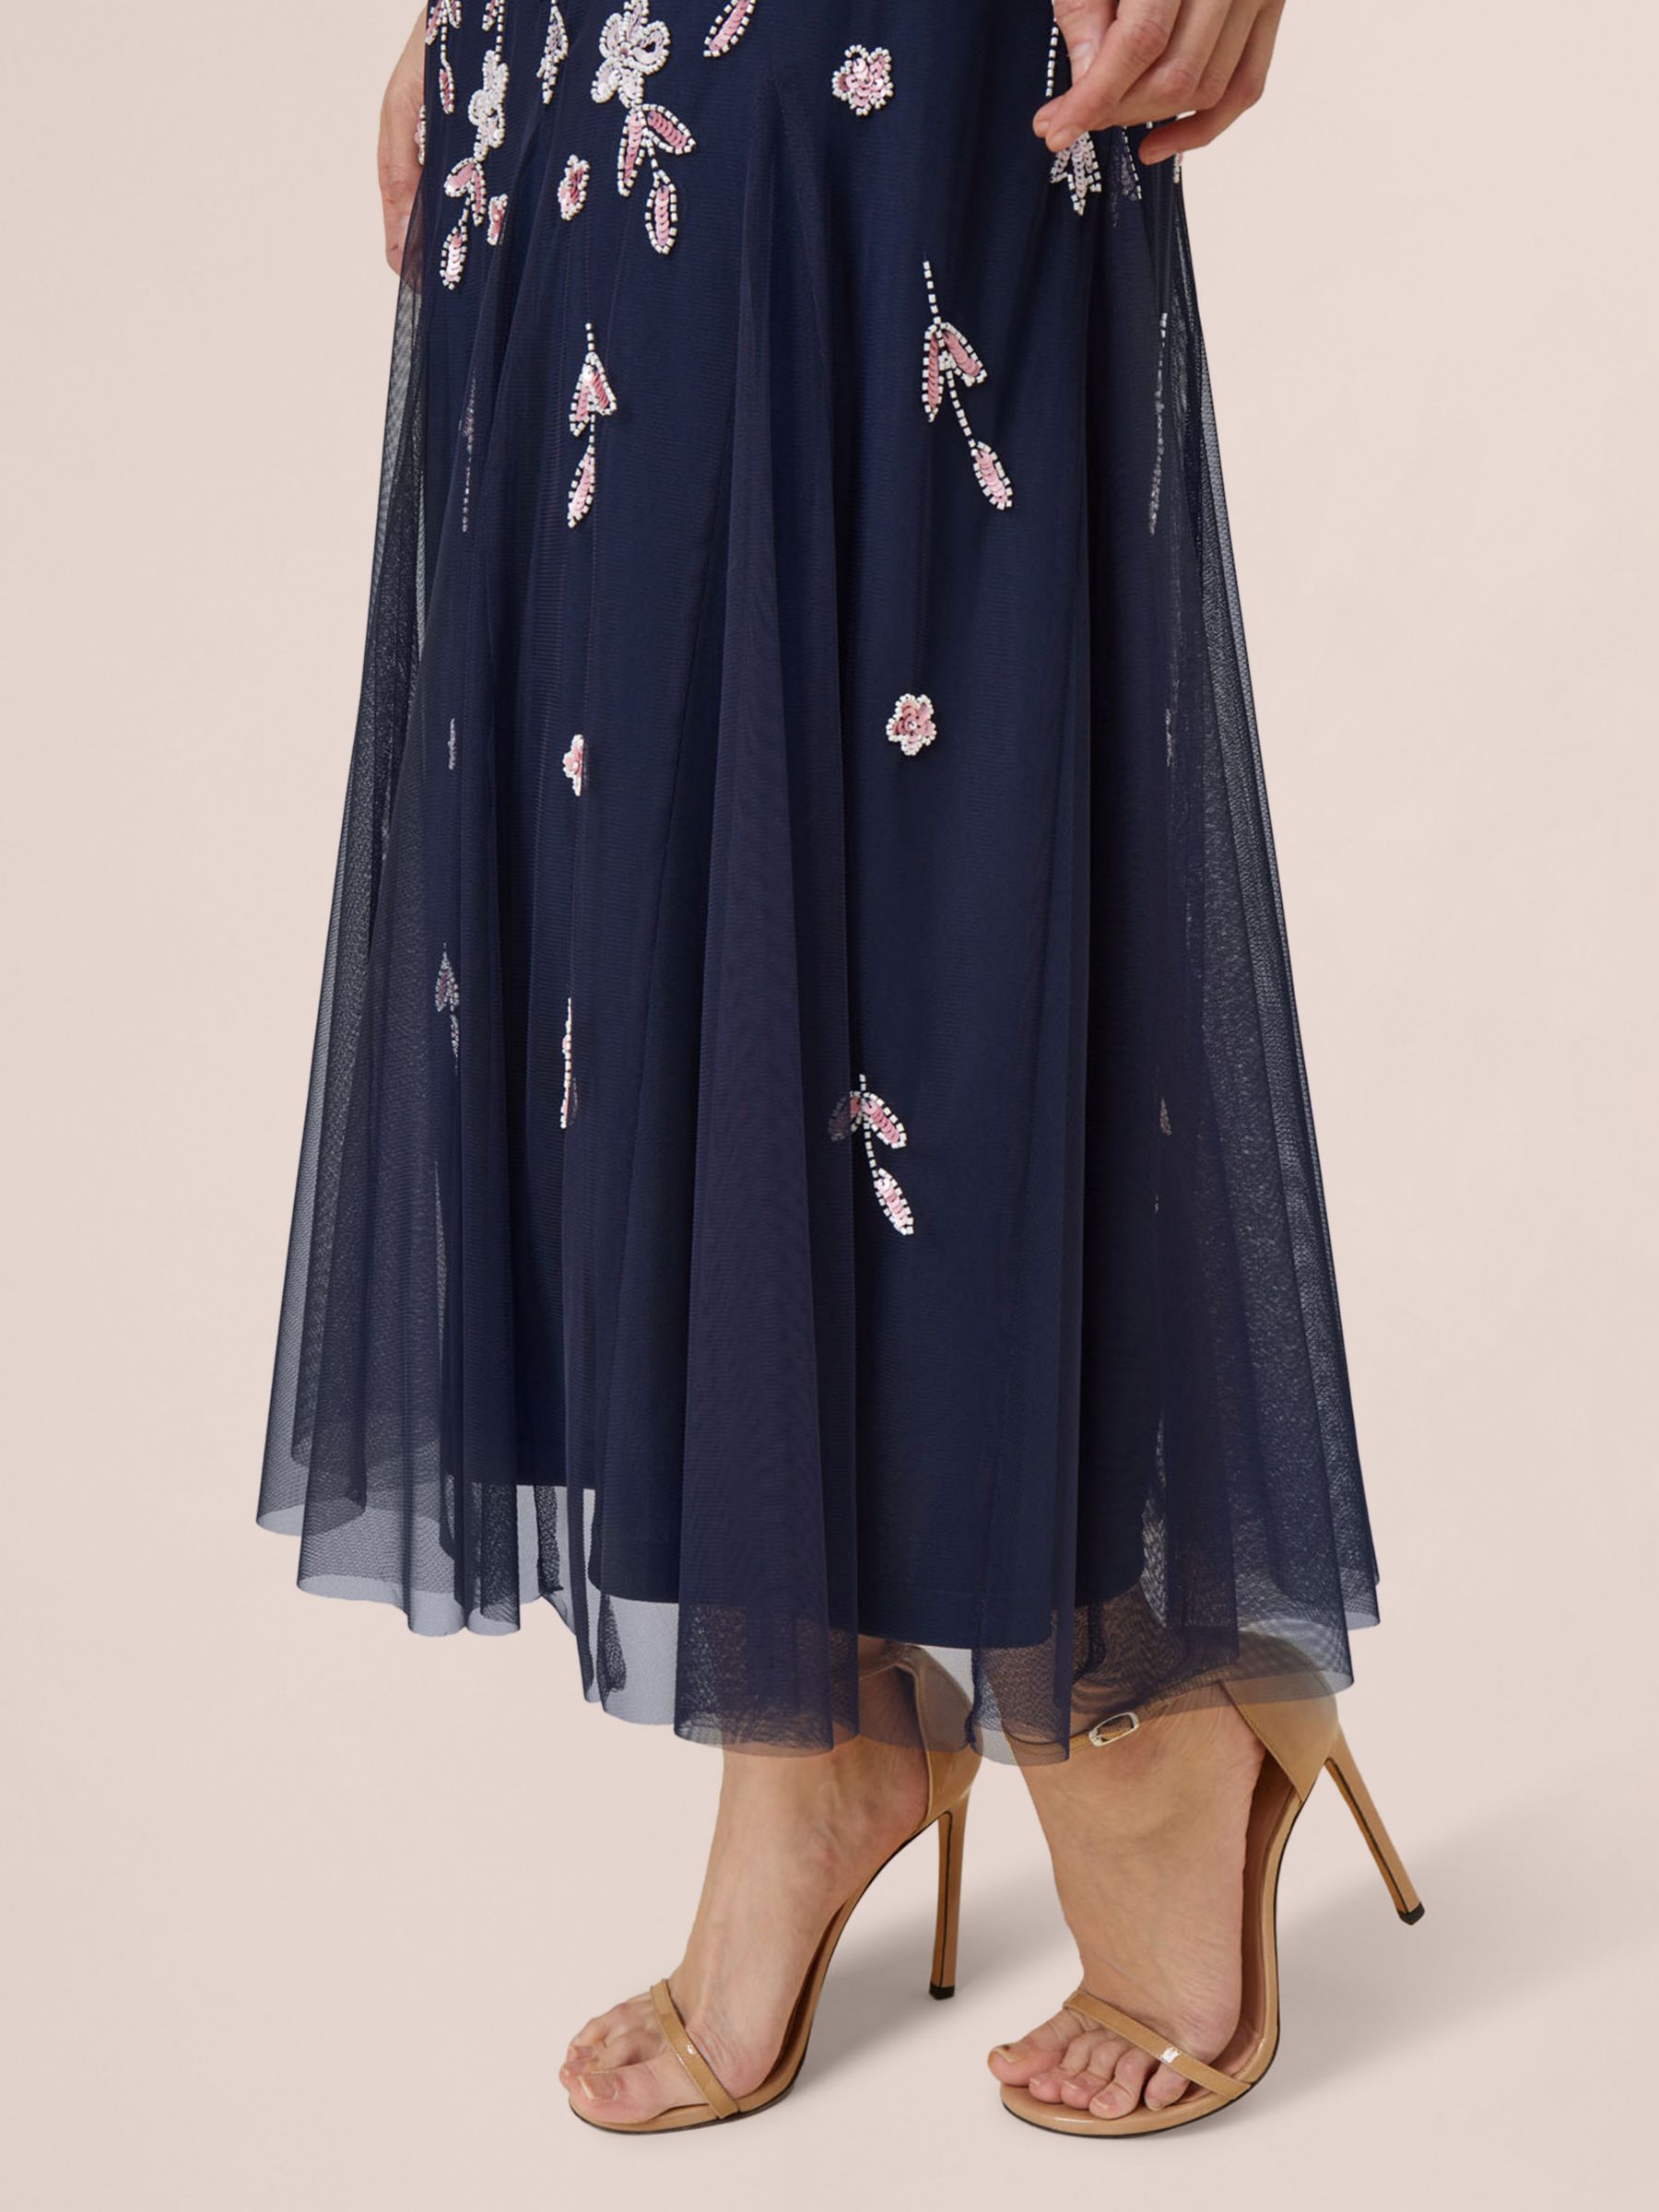 Adrianna Papell Beaded Blouson Midi Dress, Navy/Blush, 6